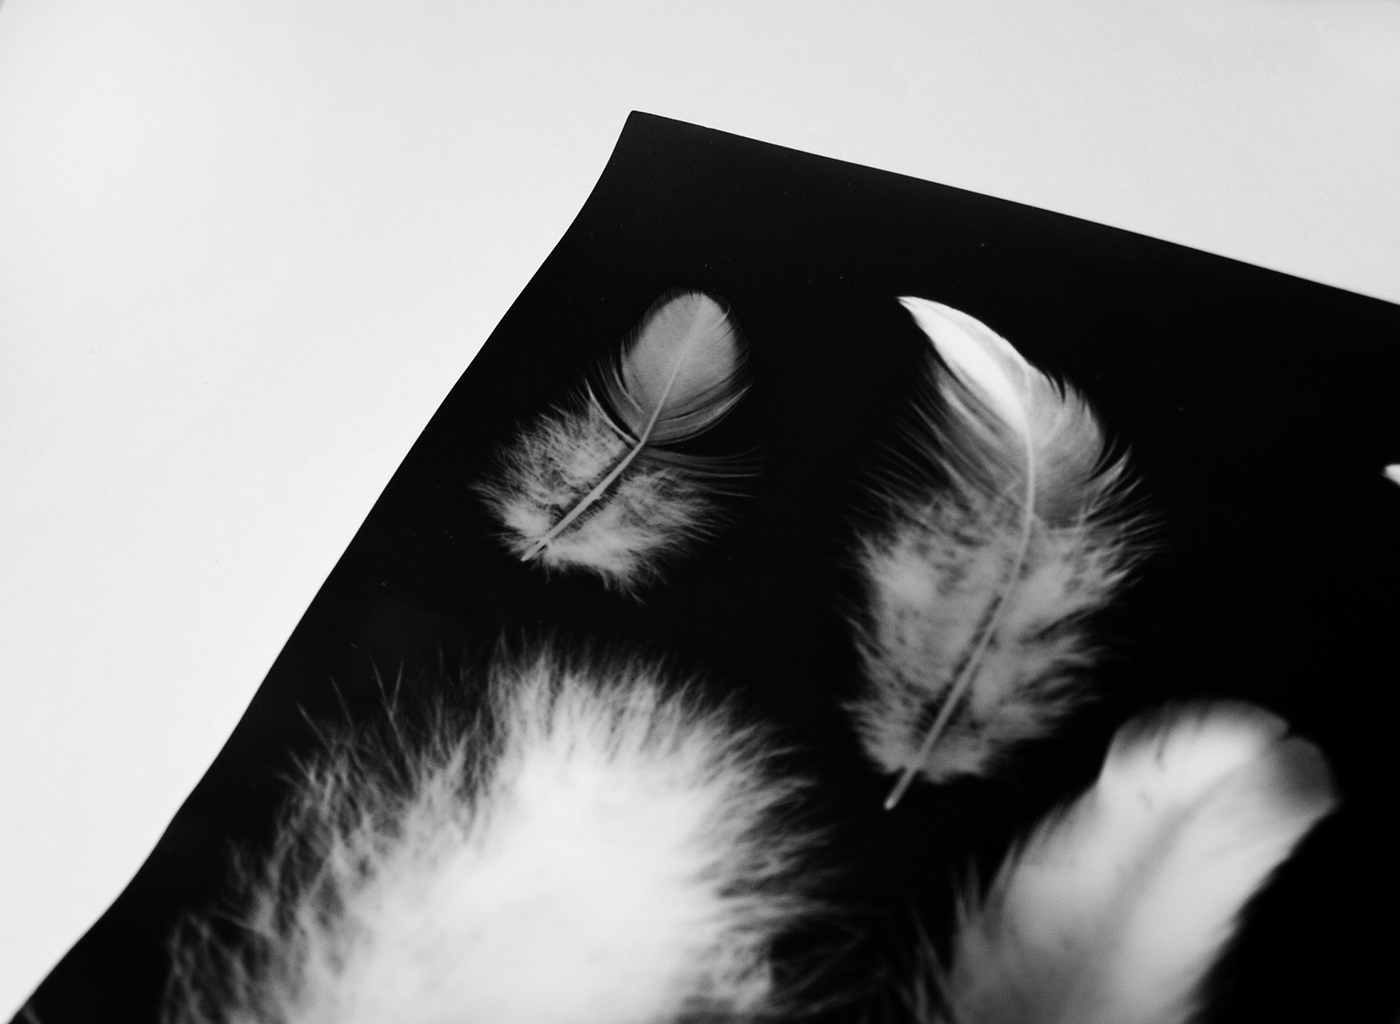 fotogram poster plakat Amadeus Photogram photograph black and white b&w gál barbi galbarb Plume feather bird